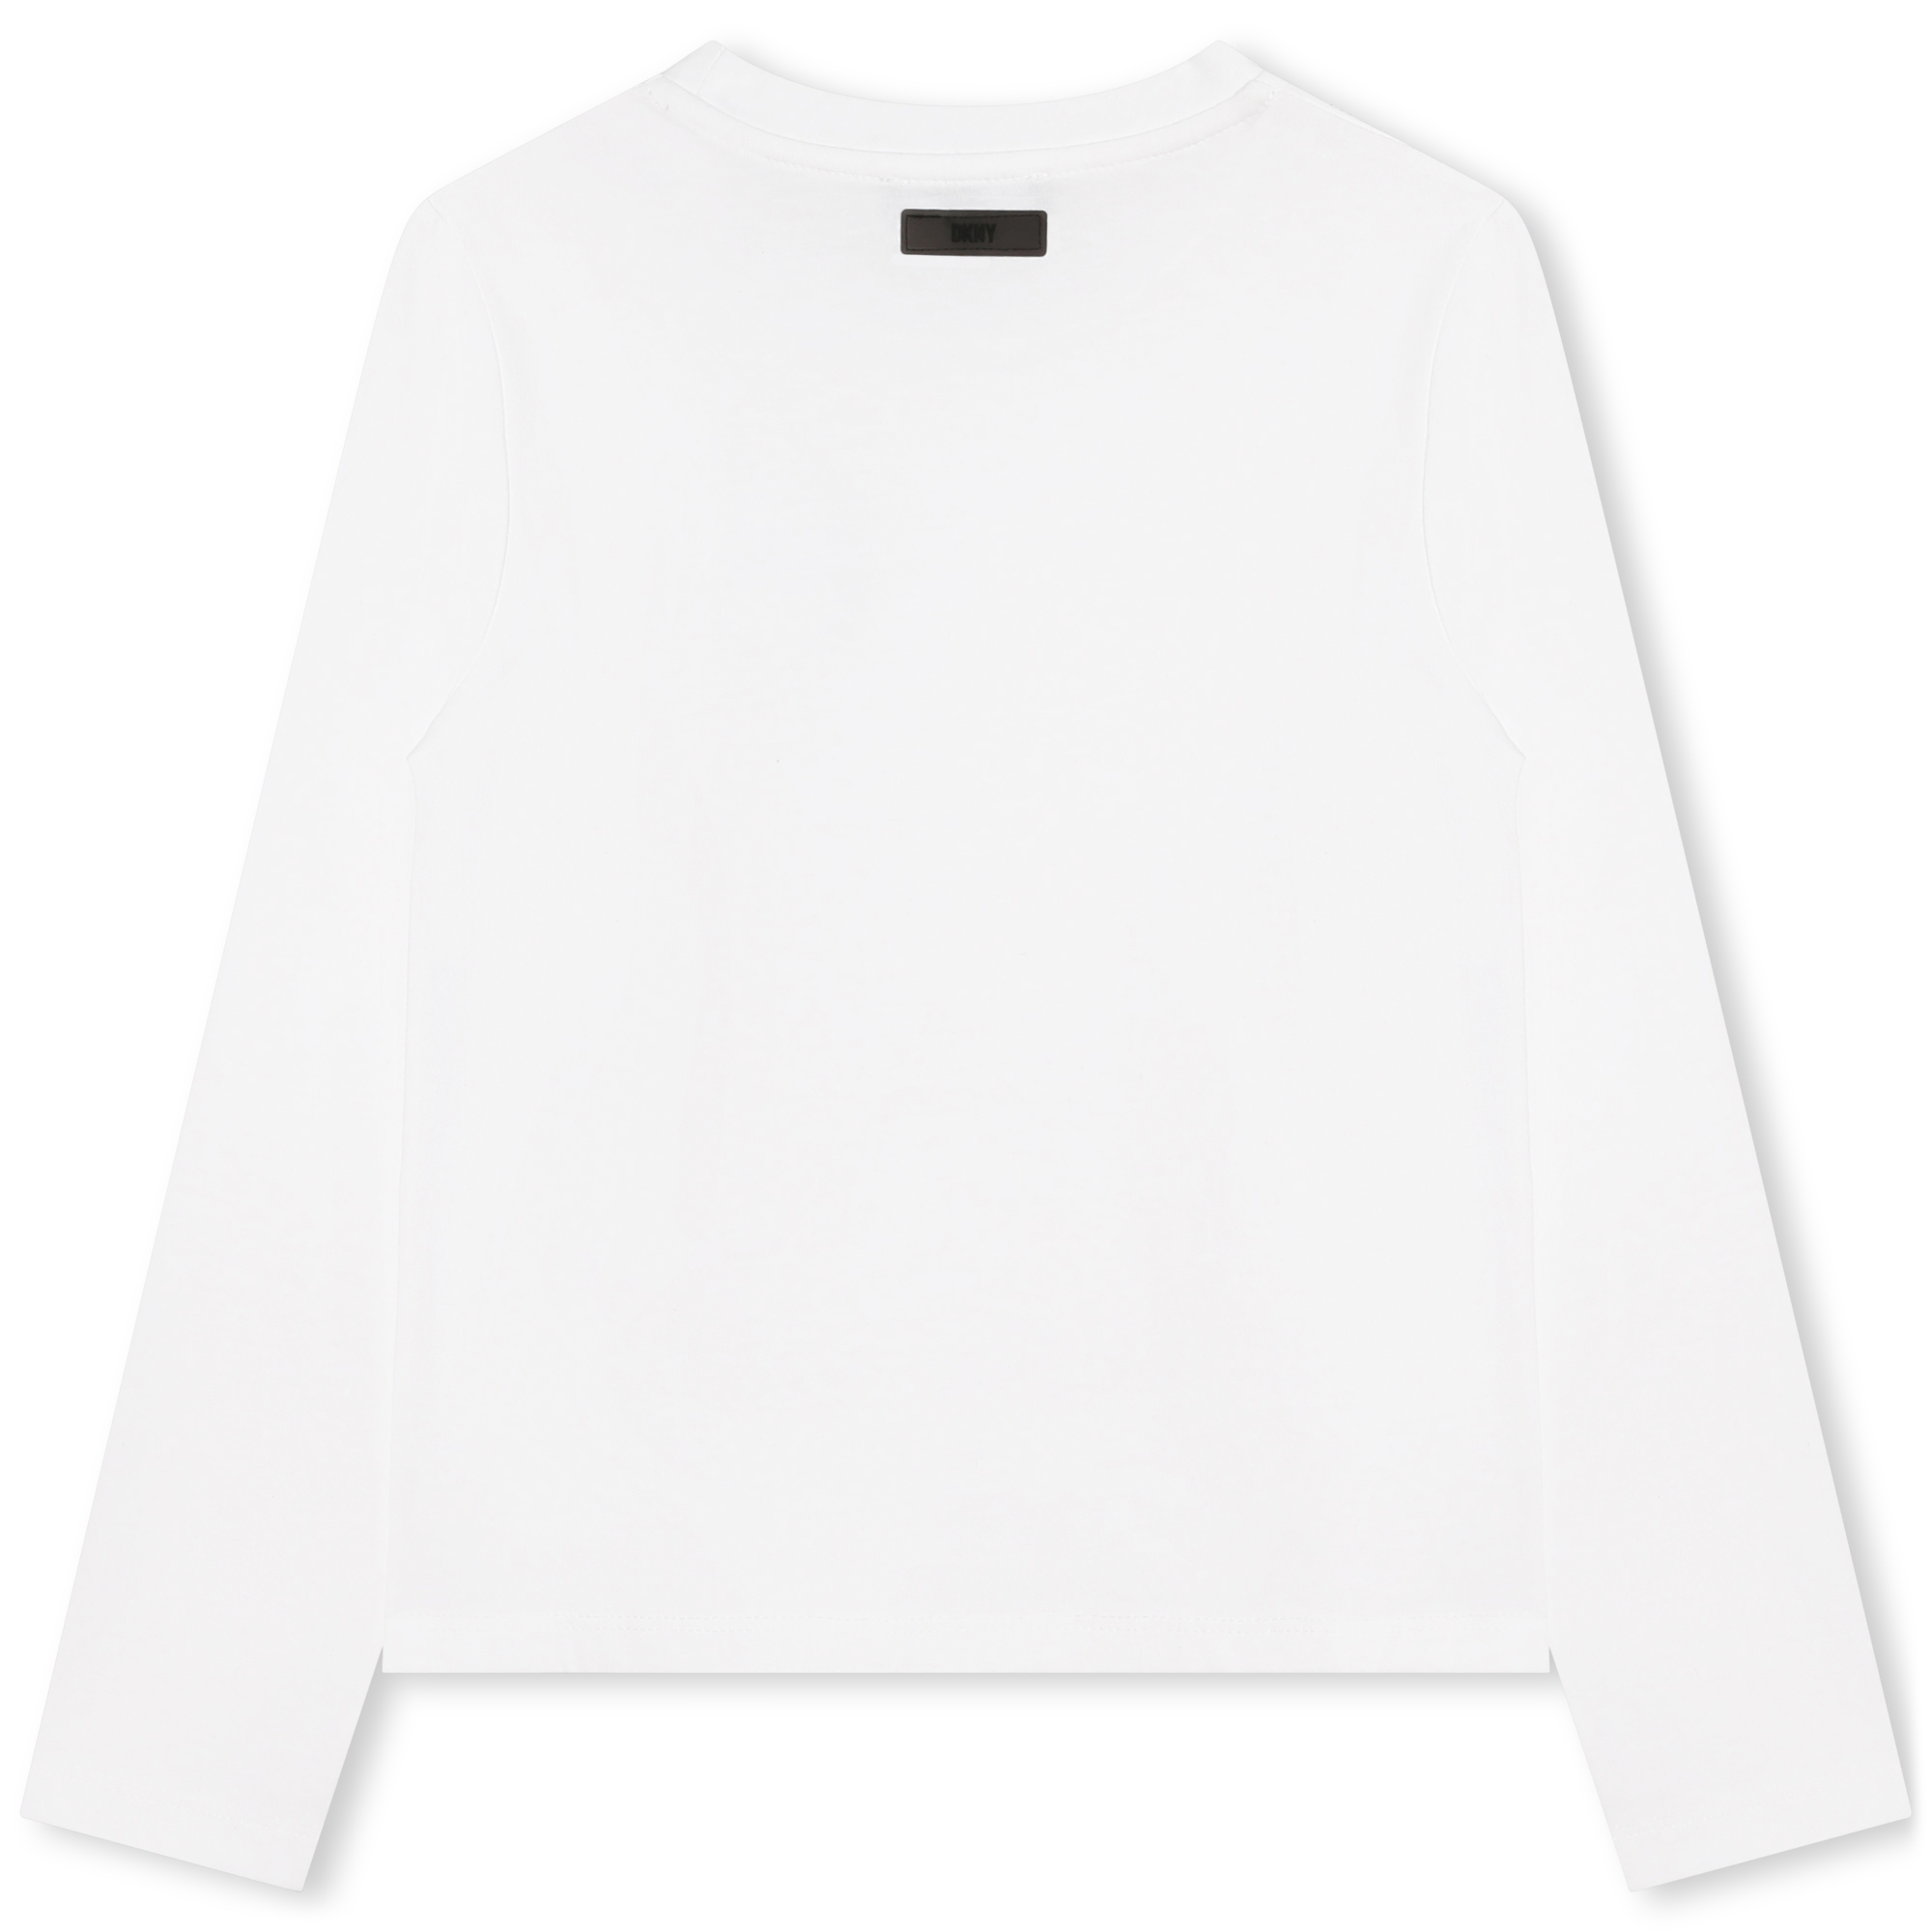 DKNY D25E15 Long Sleeve T-Shirt White